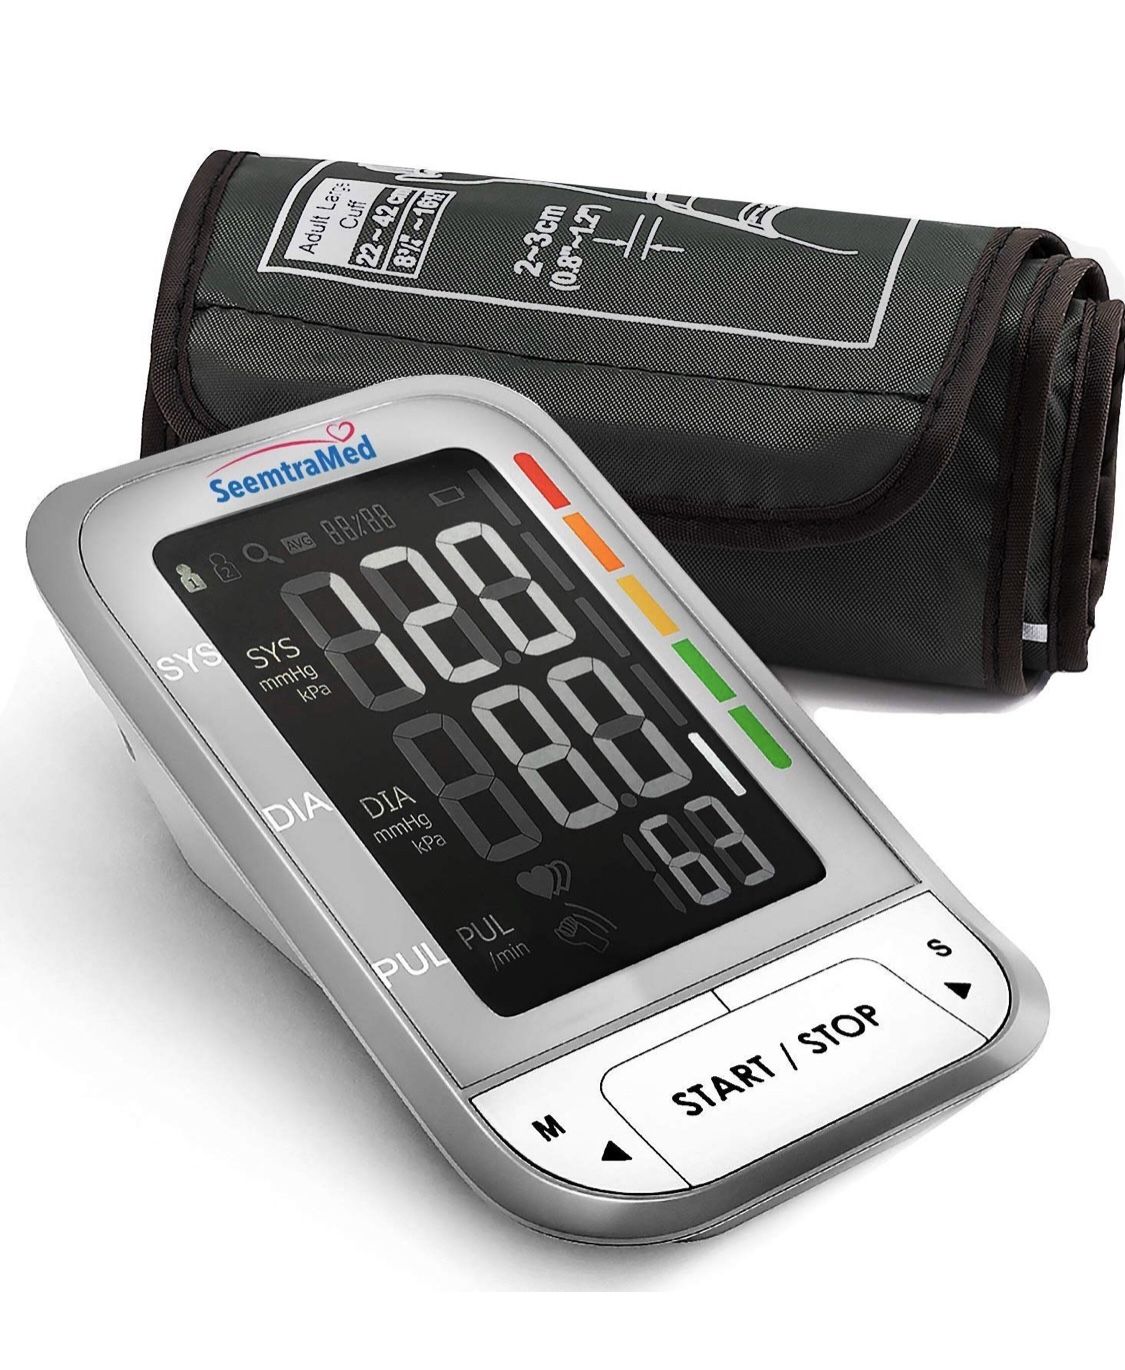 Digital Blood Pressure Monitor $20